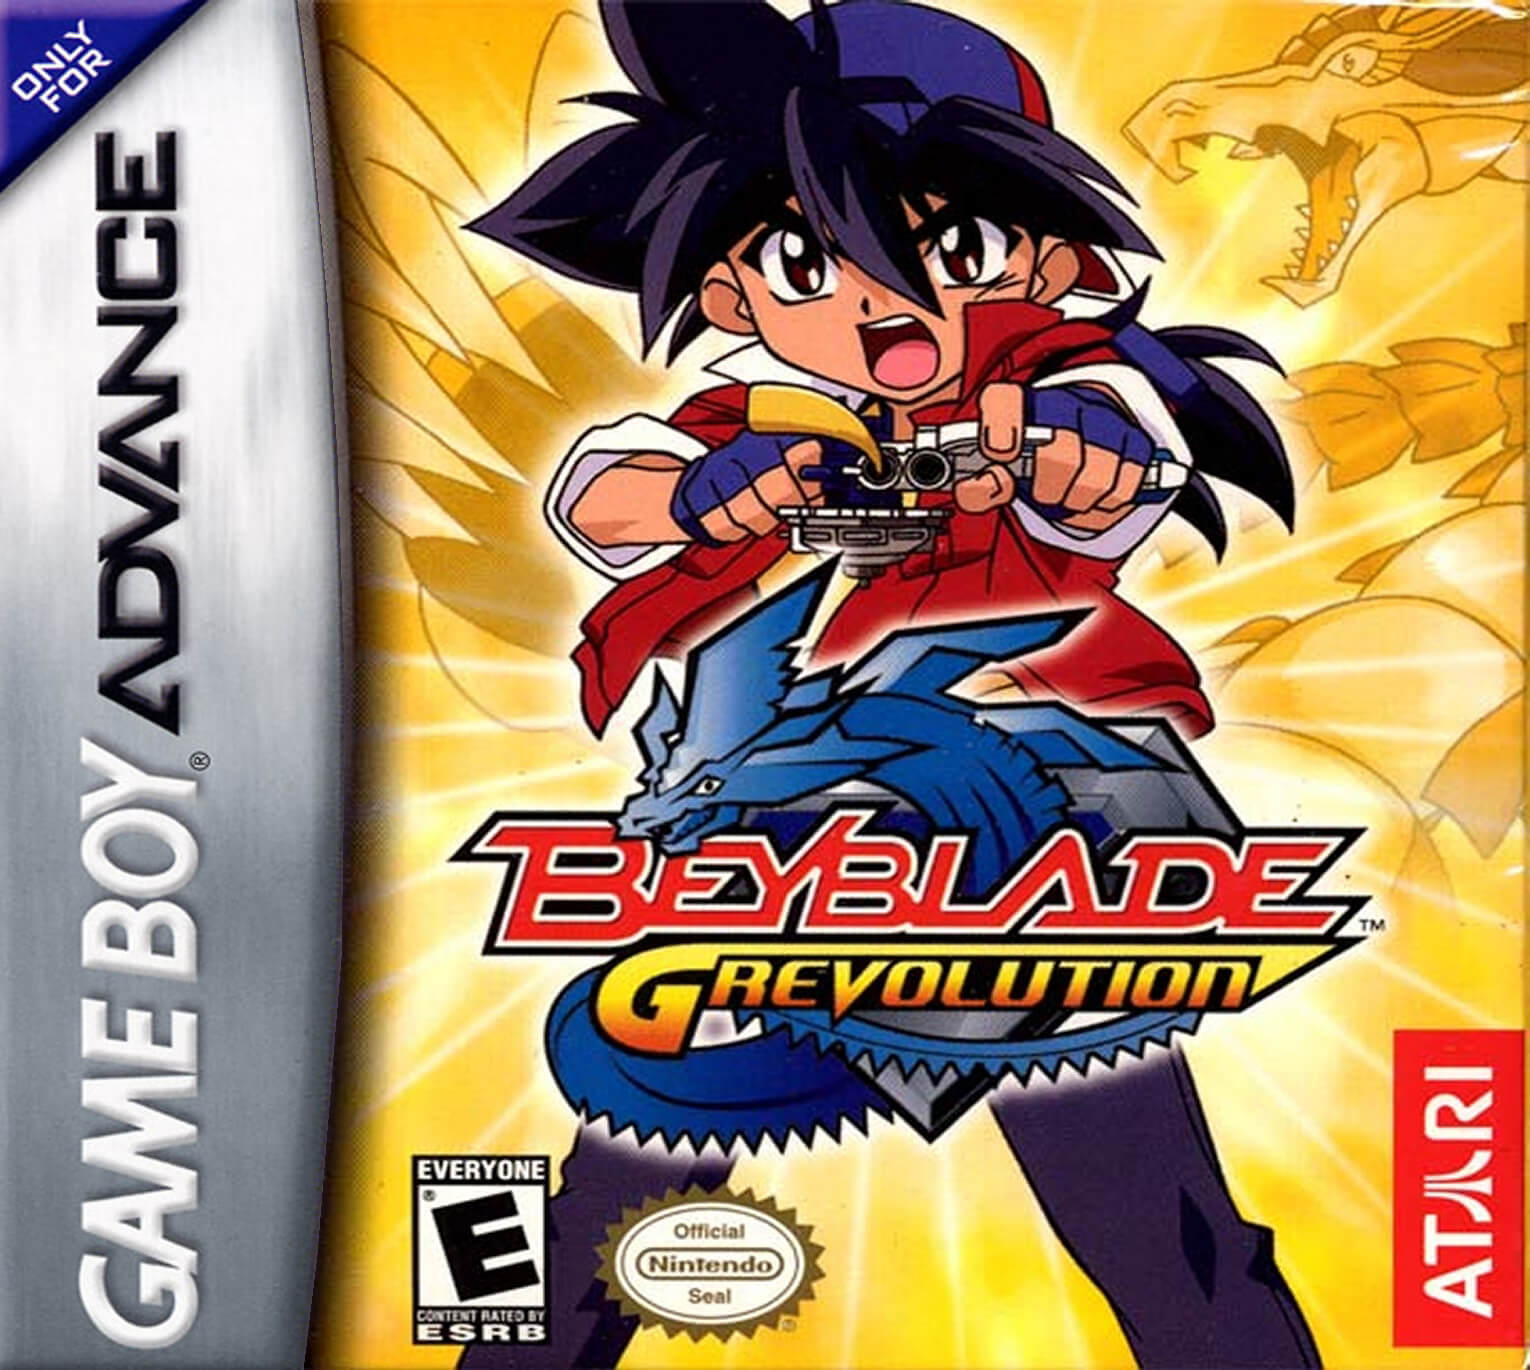 beyblade-g-revolution-game-boy-advance-gba-rom-download